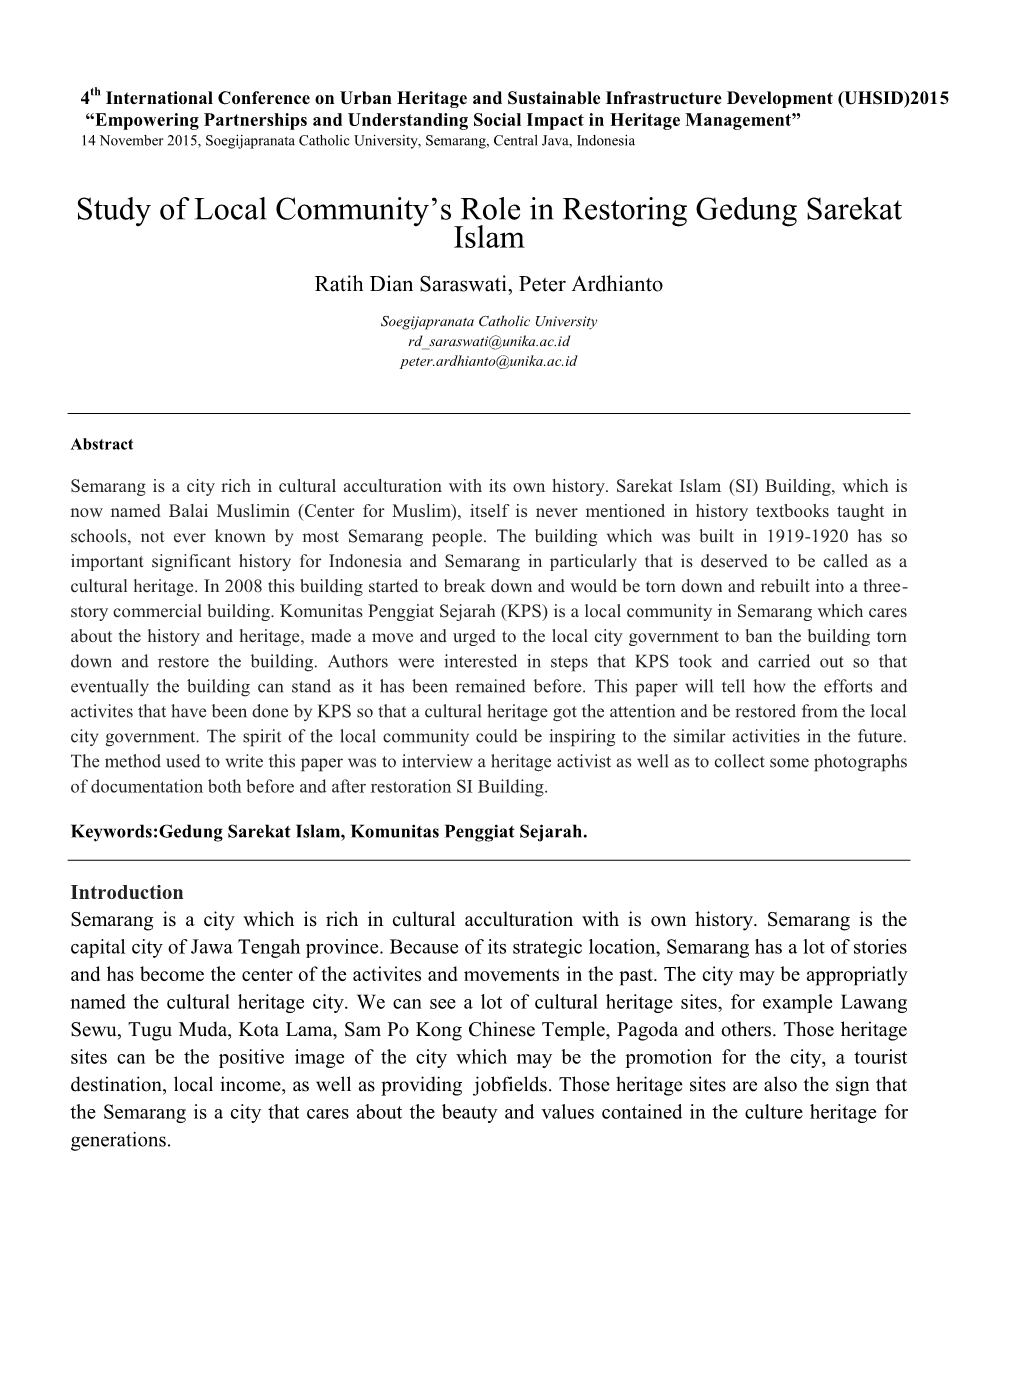 Study of Local Community's Role in Restoring Gedung Sarekat Islam